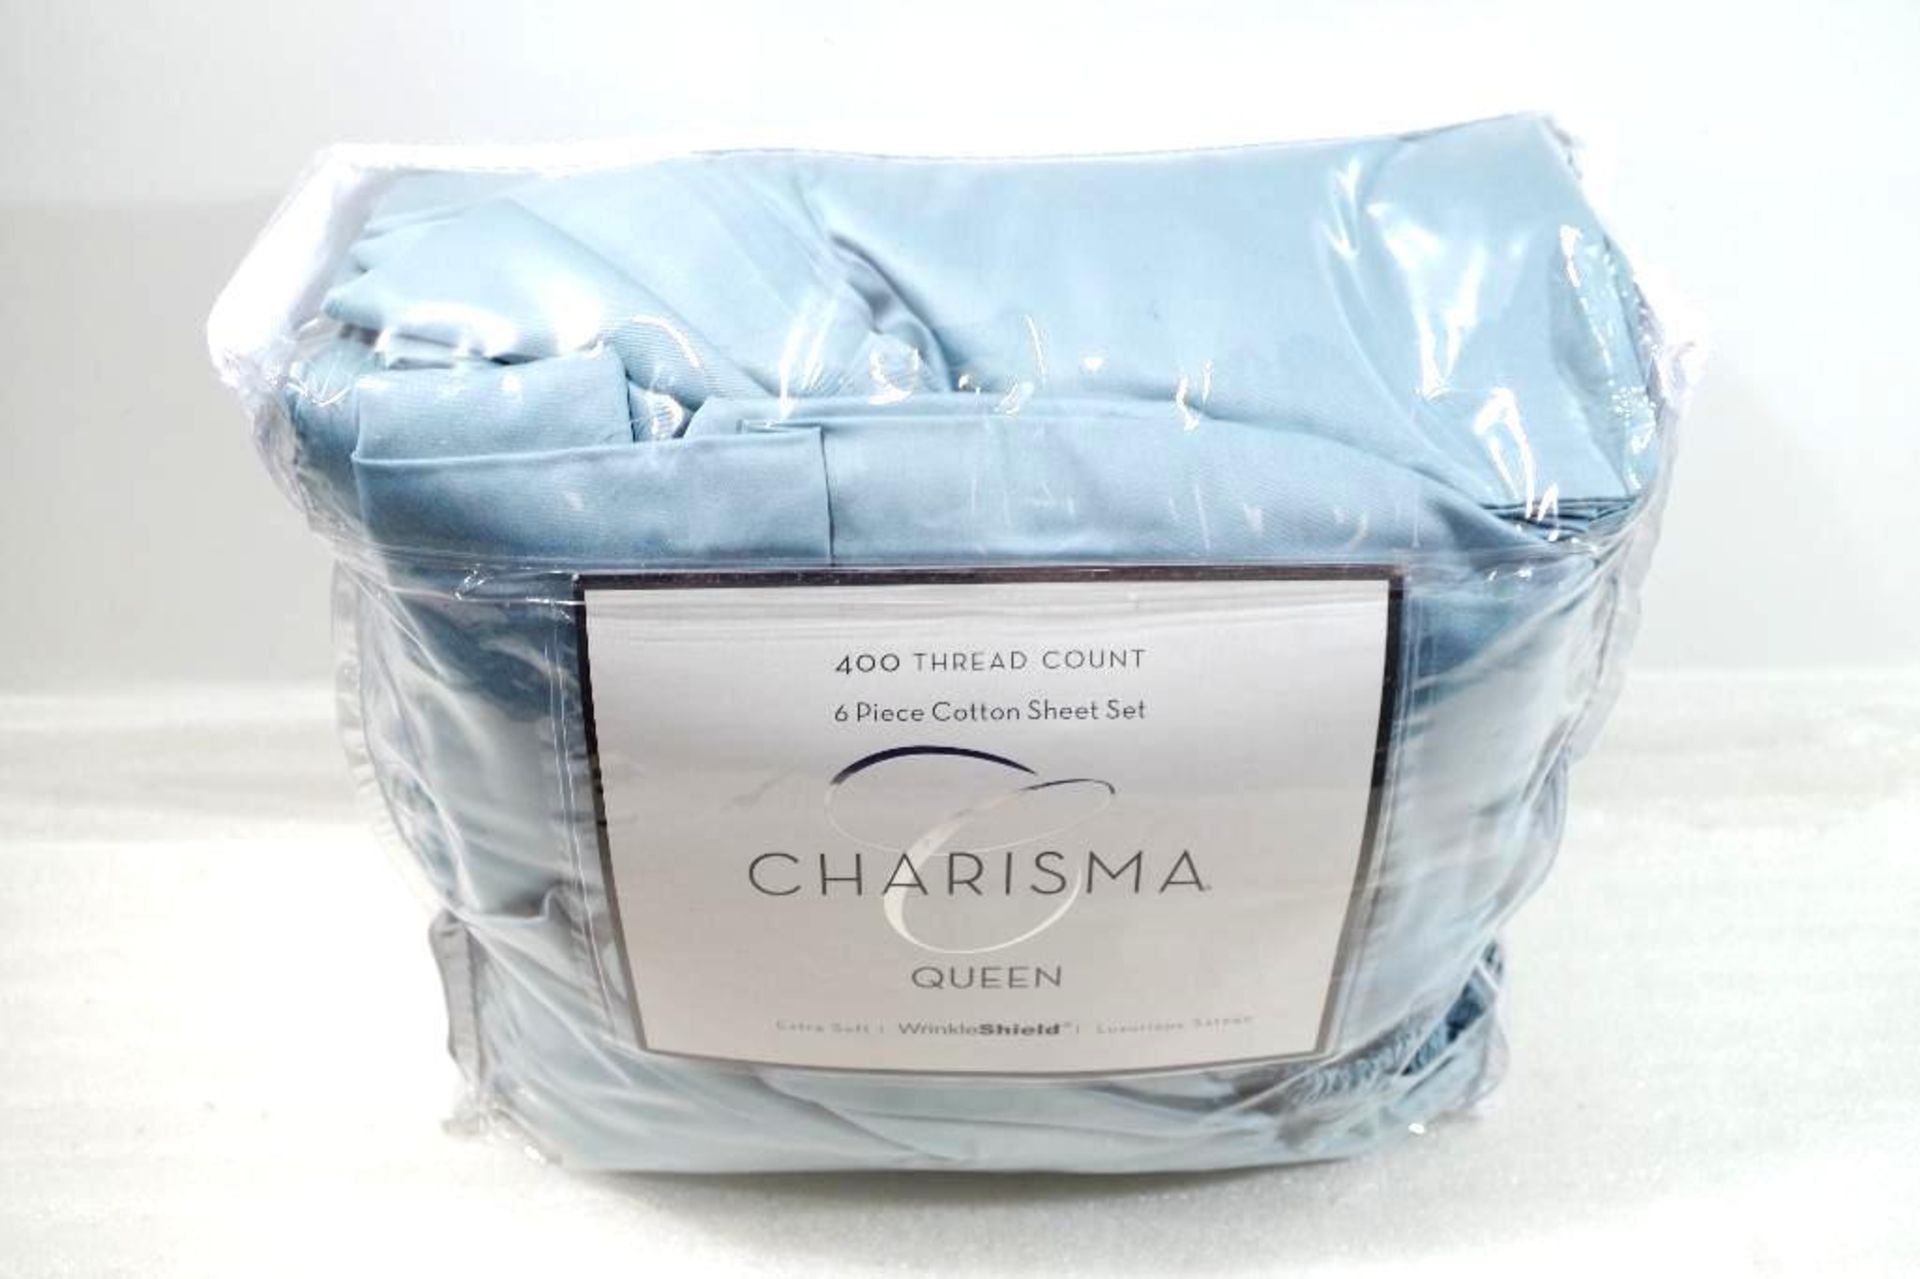 CHARISMA Queen 6-Piece Cotton Sheet Set, Store Return - Image 3 of 4